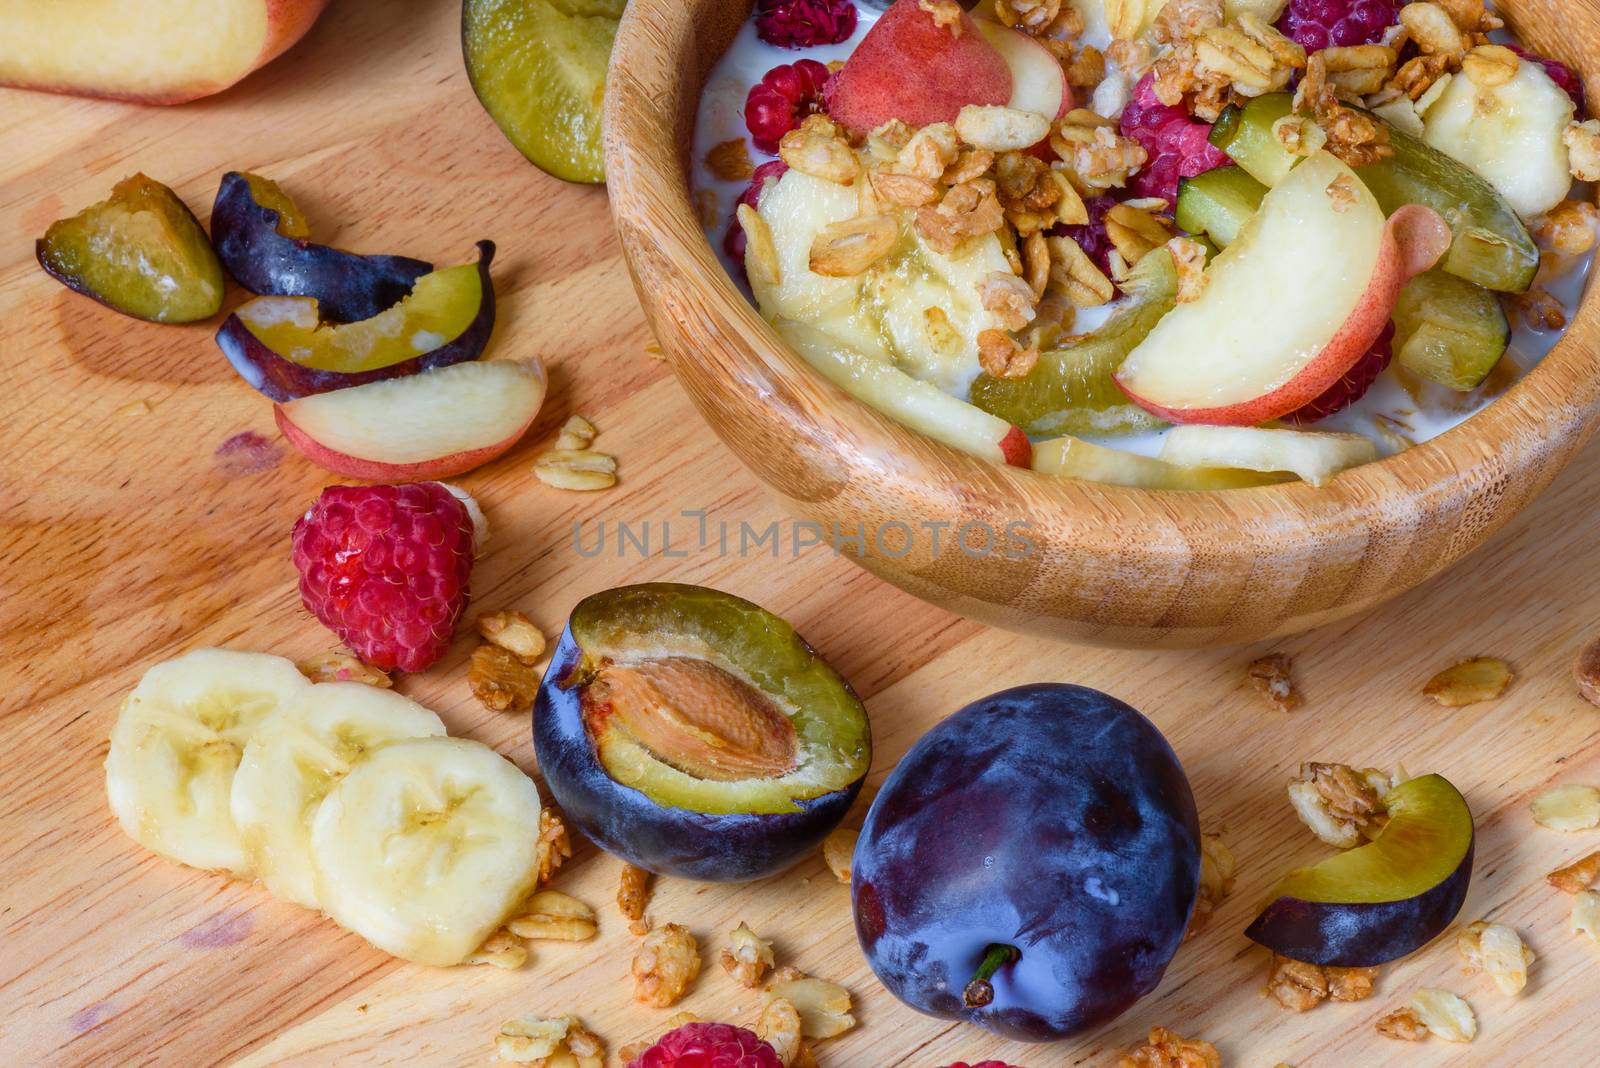 Muesli with berries, fruits and milk by Seva_blsv